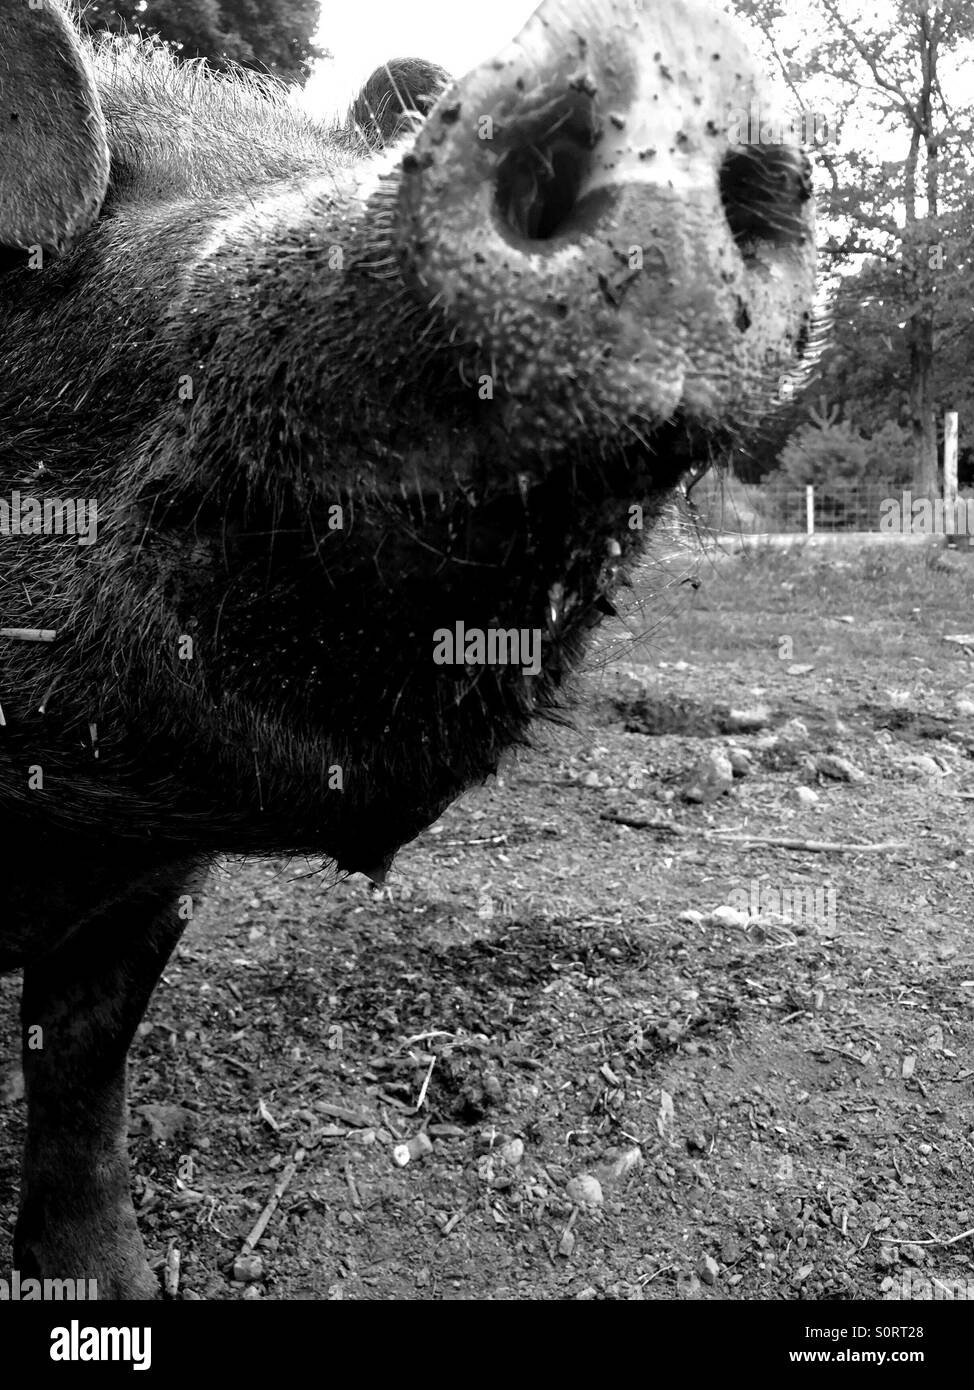 Pig nose close-up Stock Photo